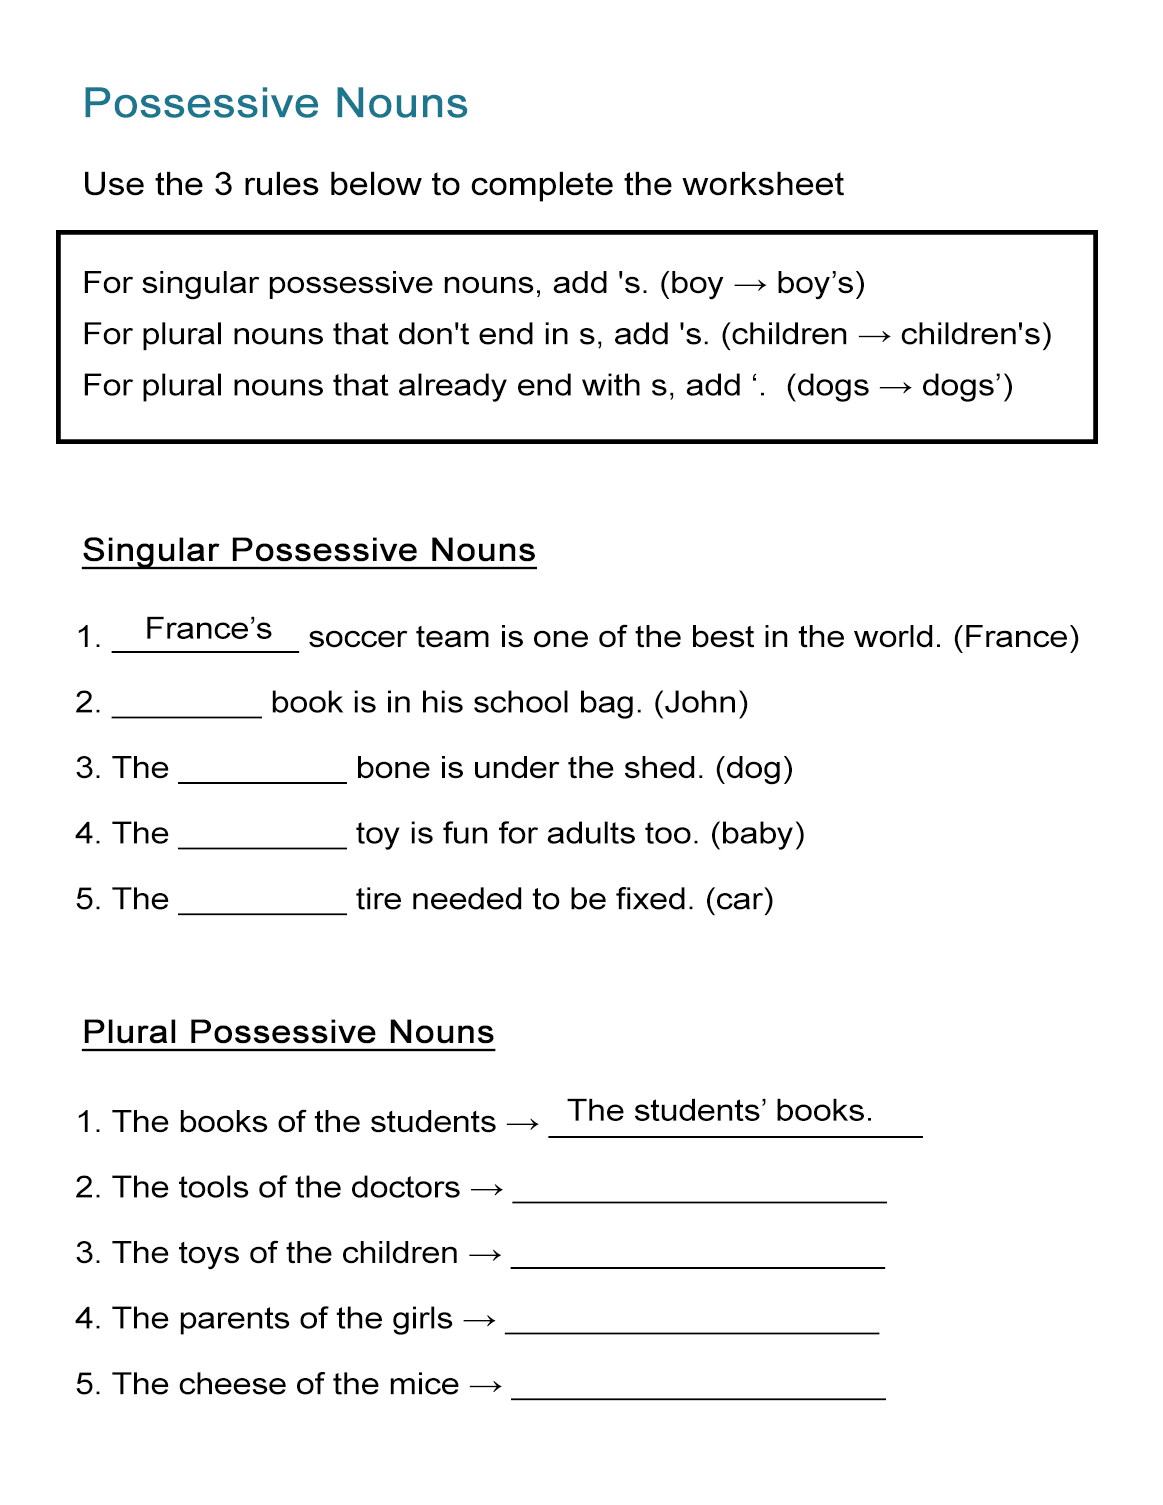 Possessive Nouns Worksheet: Singular and Plural Nouns - ALL ESL Inside Singular Possessive Nouns Worksheet